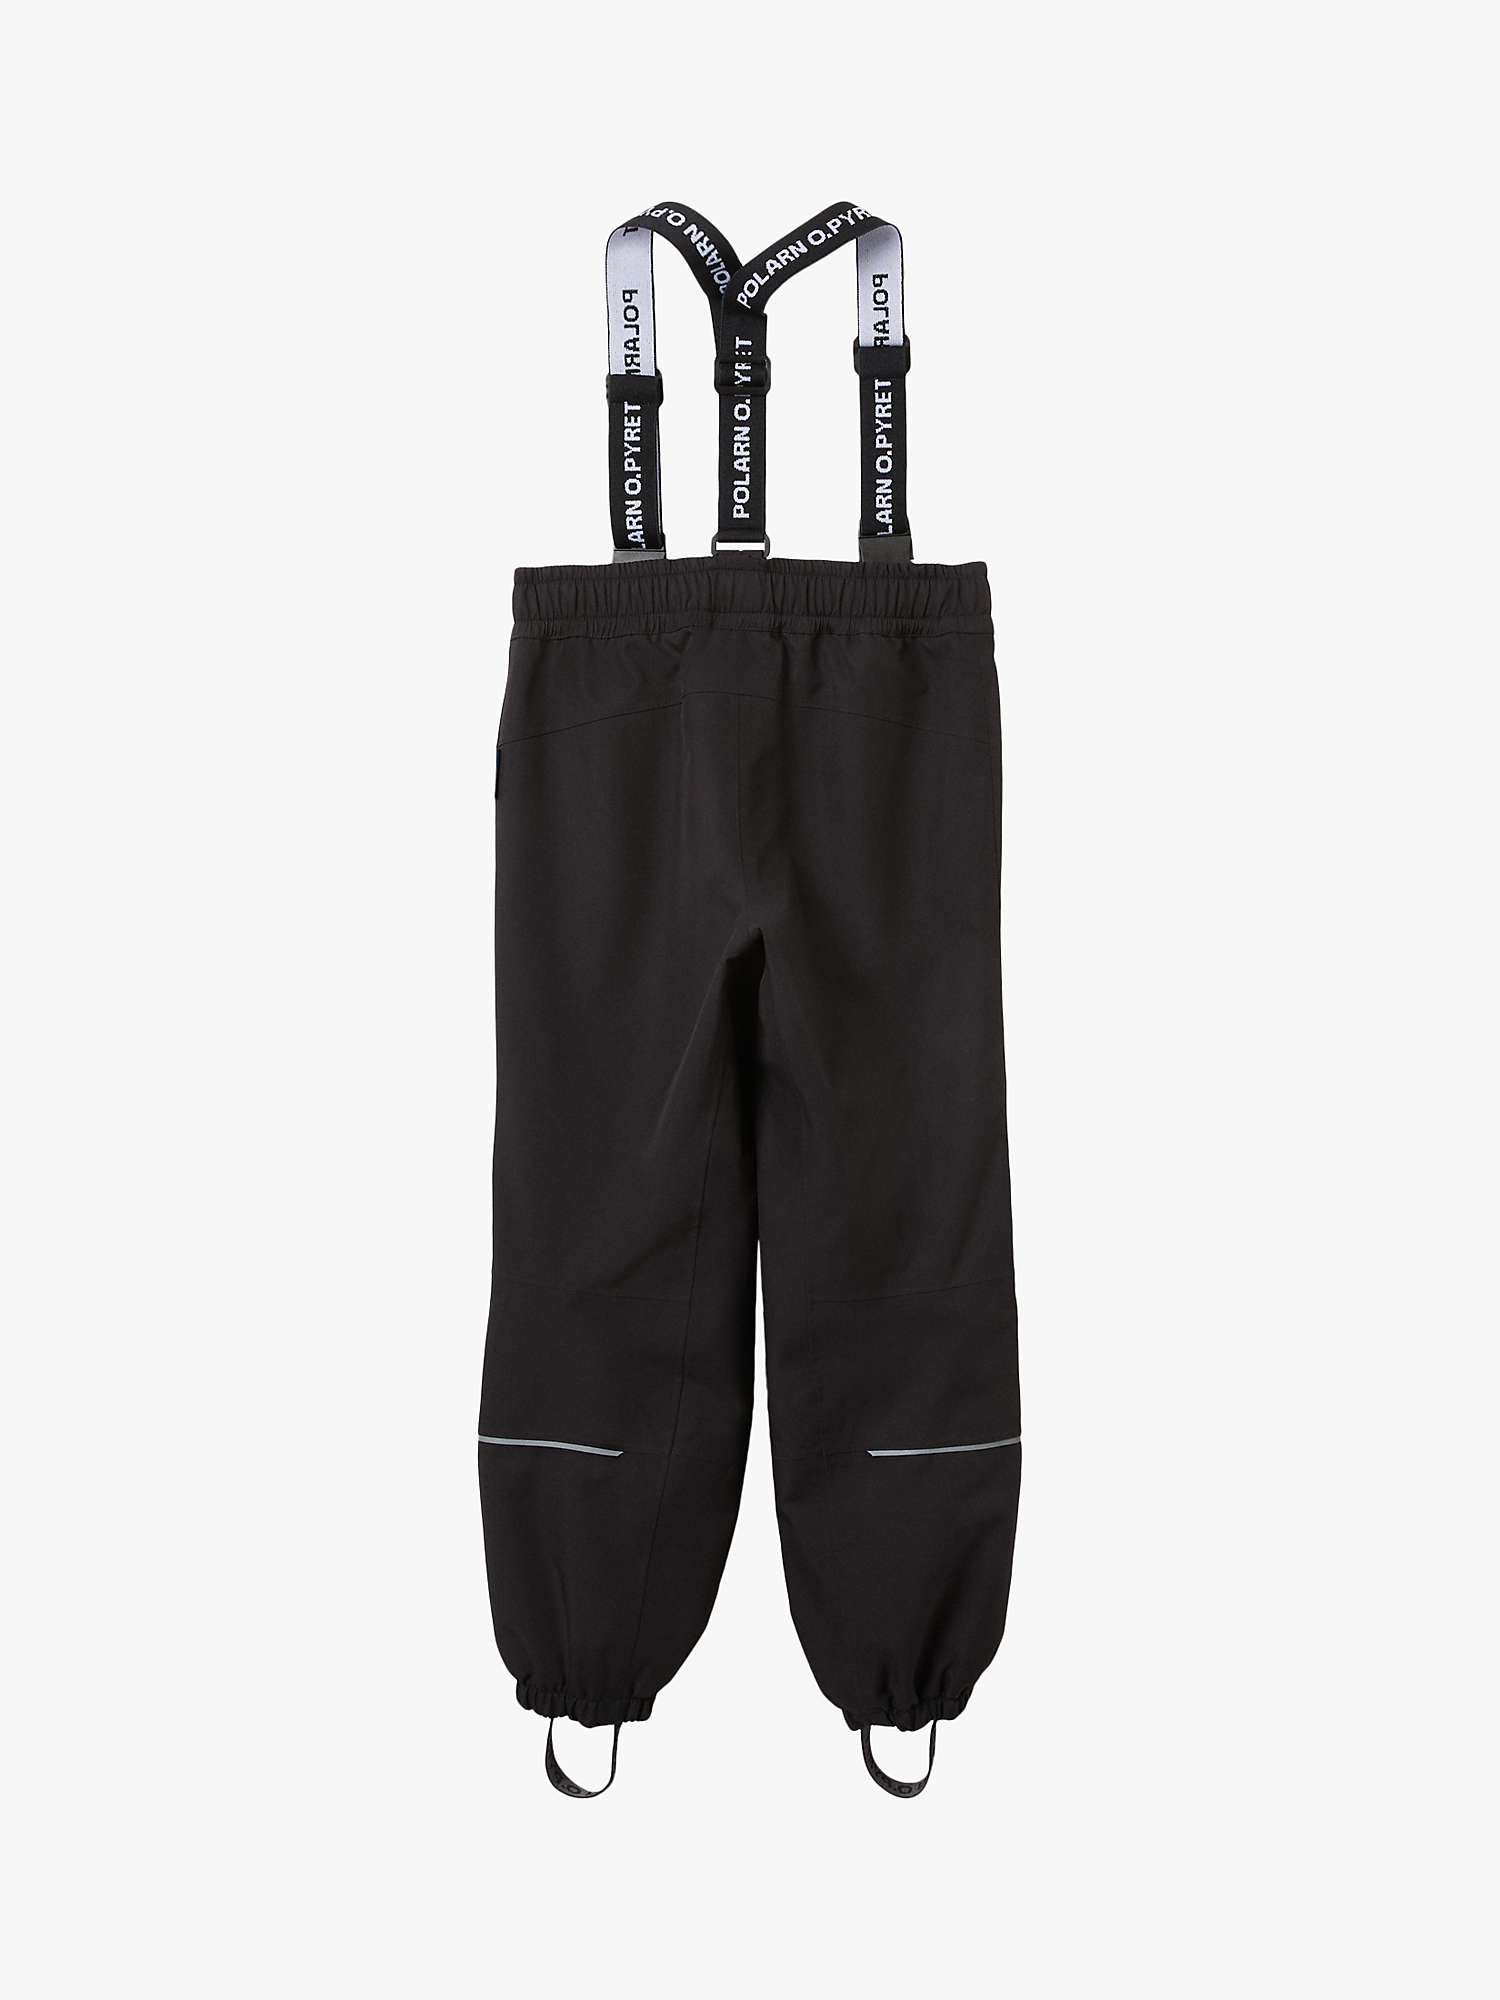 Buy Polarn O. Pyret Kids' Flexi Waterproof Trousers, Black Online at johnlewis.com